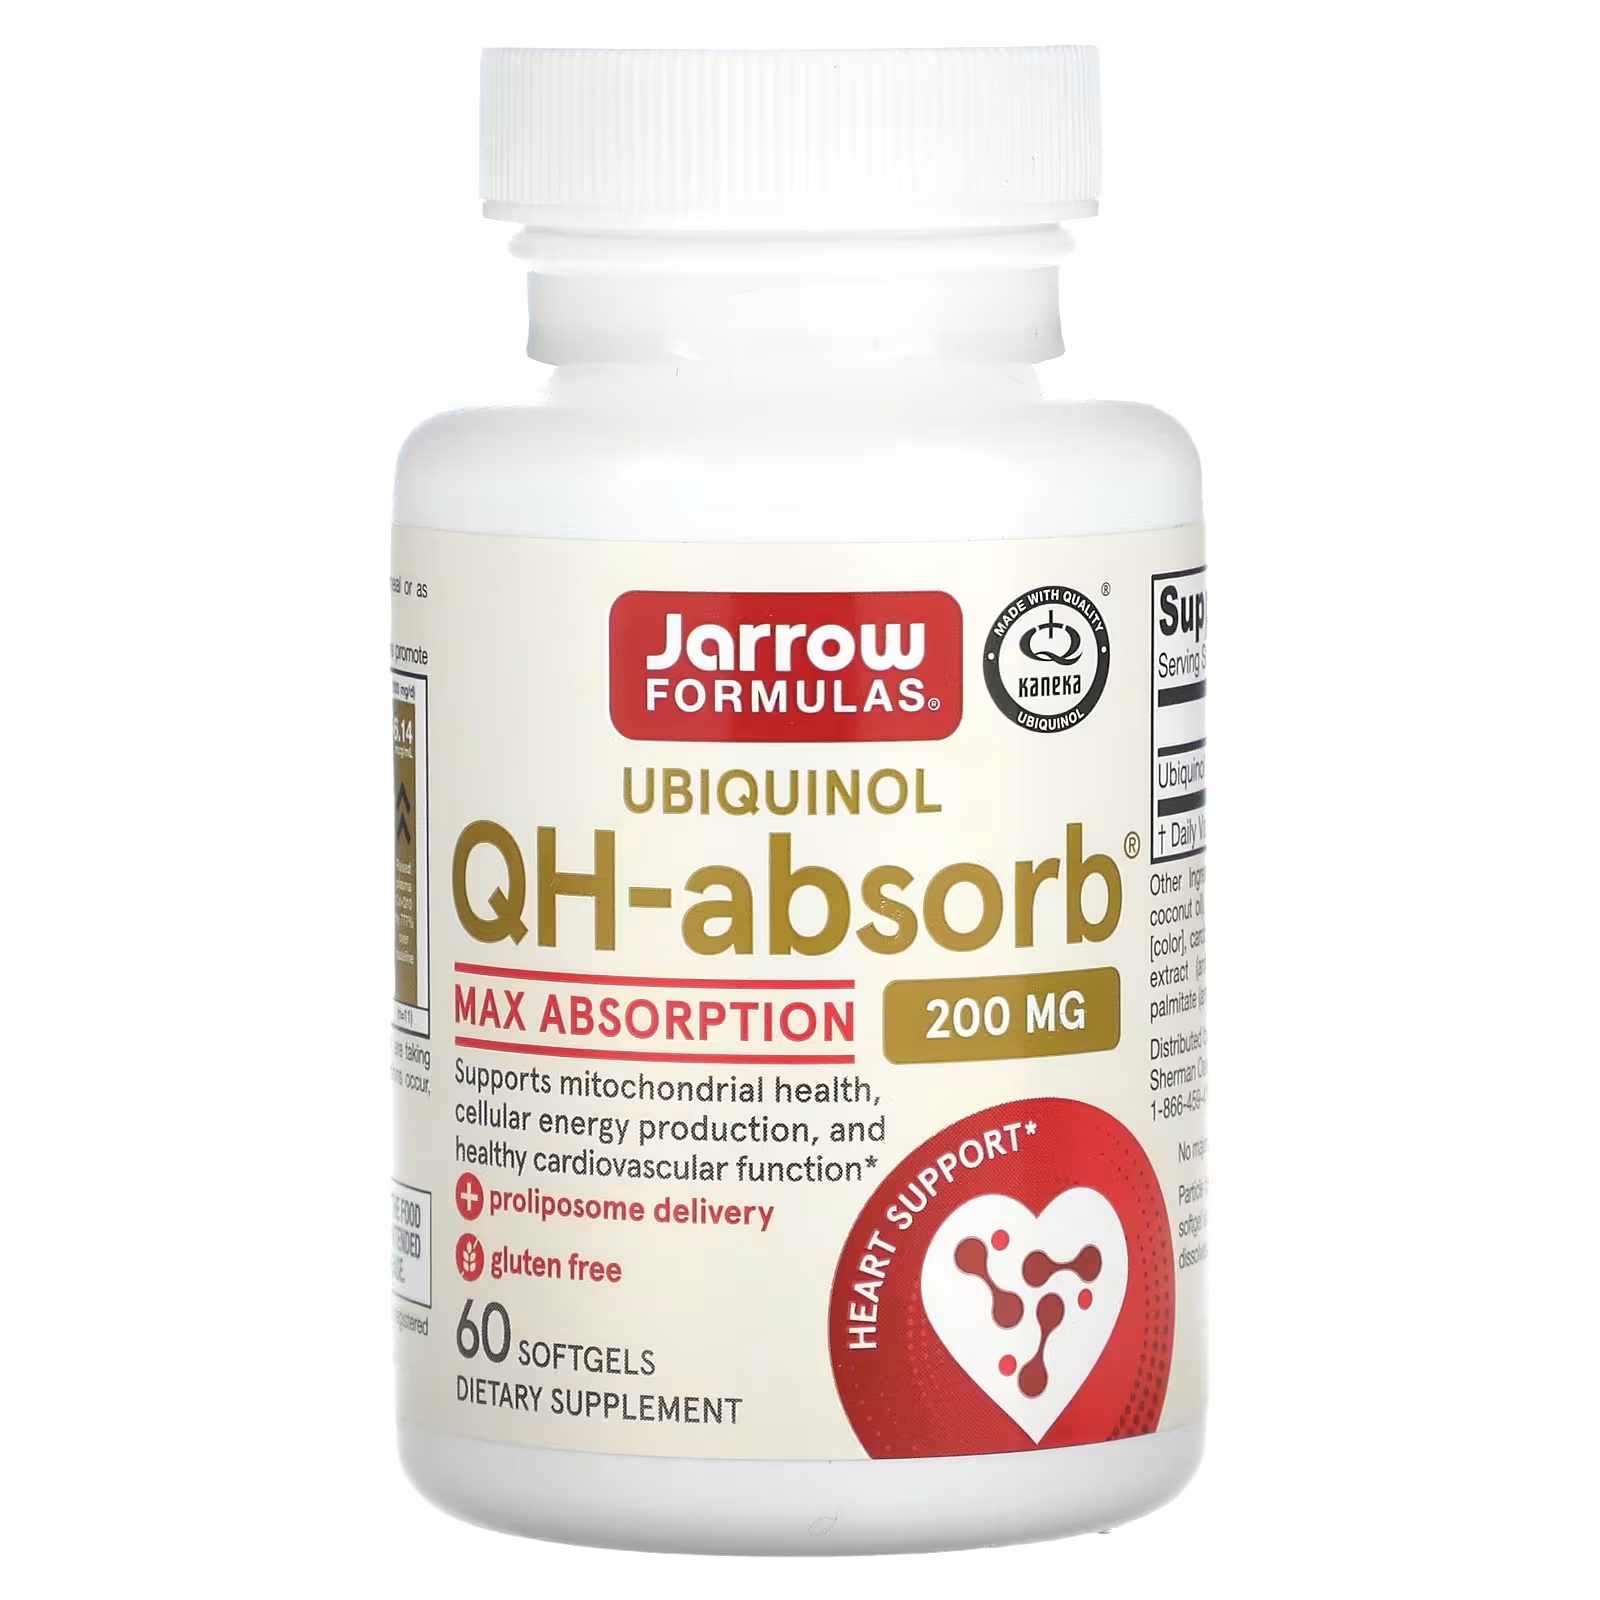 Jarrow Formulas Убихинол QH-Absorb Max Absorb 200 мг, 60 мягких таблеток jarrow formulas убихинол qh absorb max absorb 200 мг 60 мягких таблеток